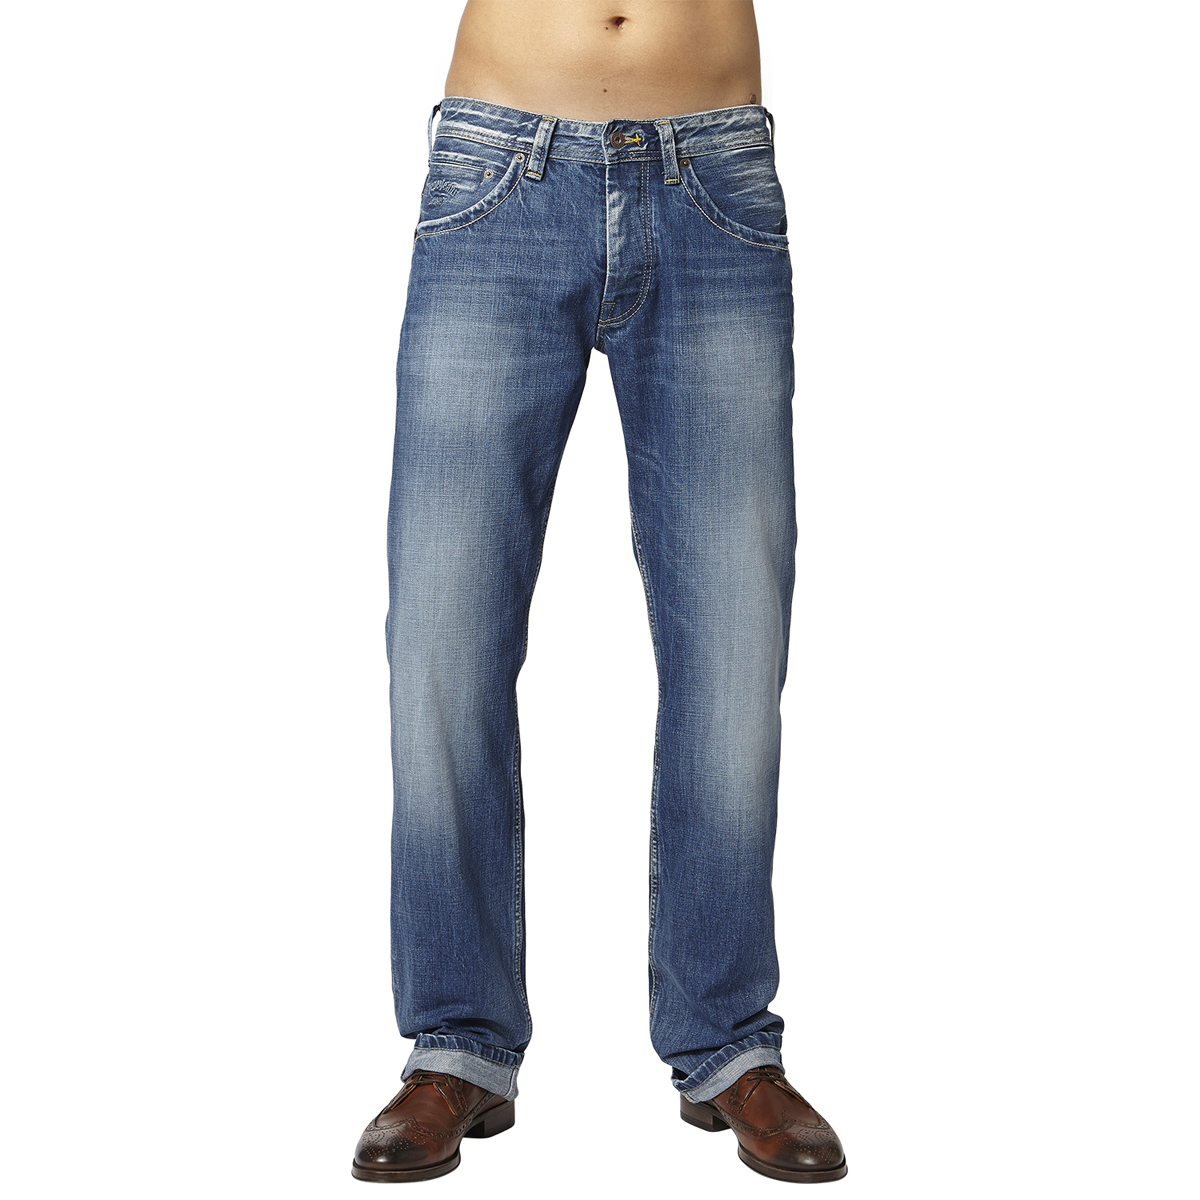 Джинсы мужские Pepe Jeans Jeanius, цвет: синий. 097.PM200016.N56.000. Размер 32-34 (48-34)